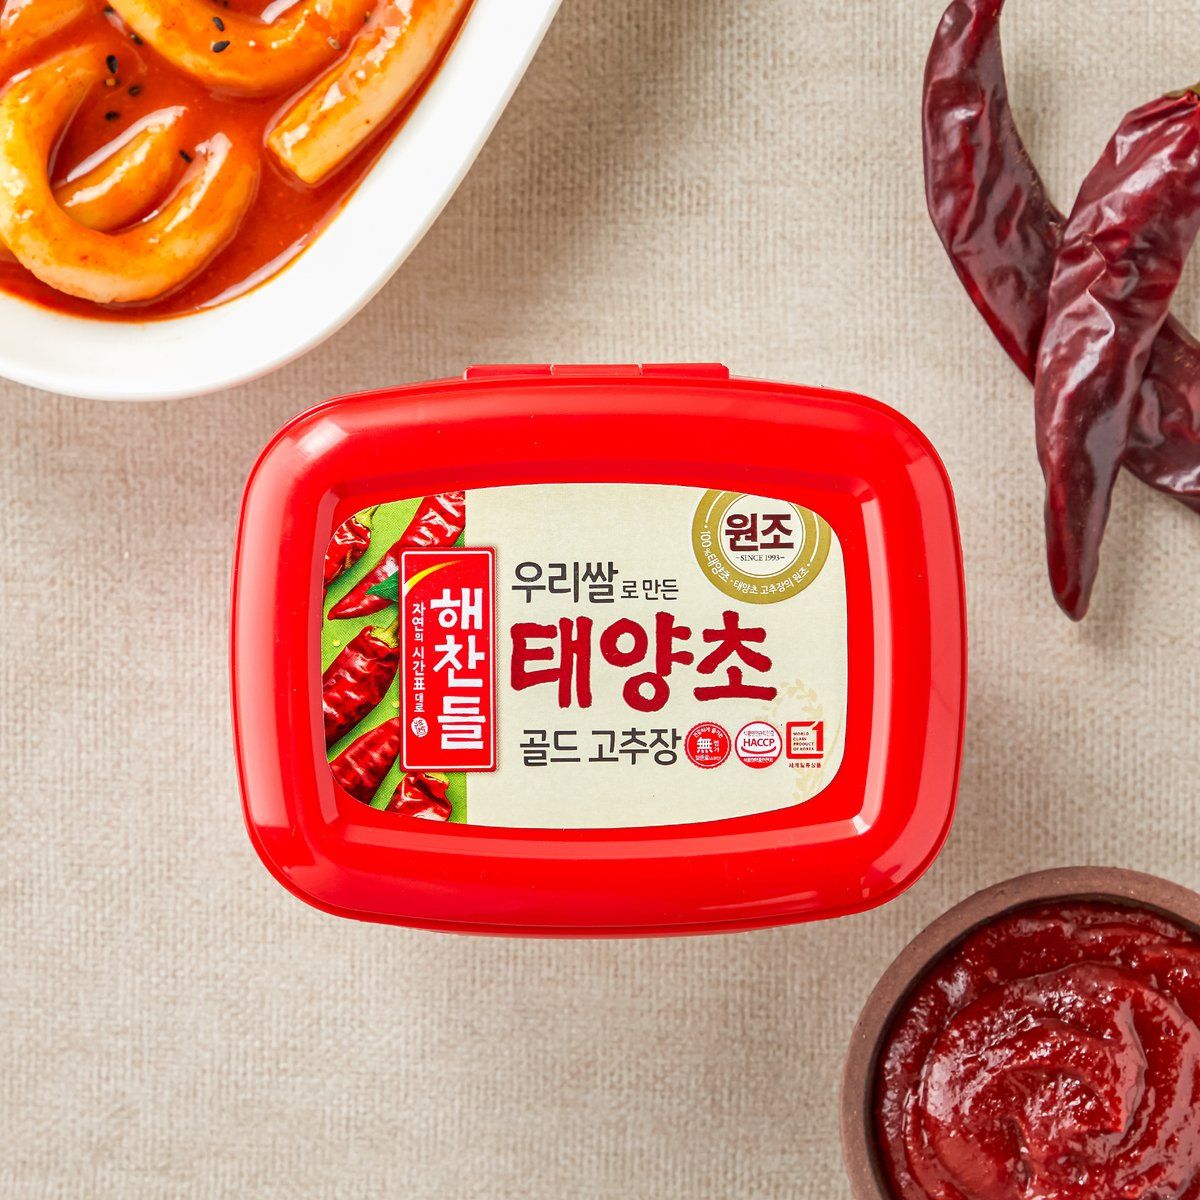 Korean Hot Pepper Paste 해찬들 우리쌀 태양초 골드 고추장 (500g) | CJ Haechandle